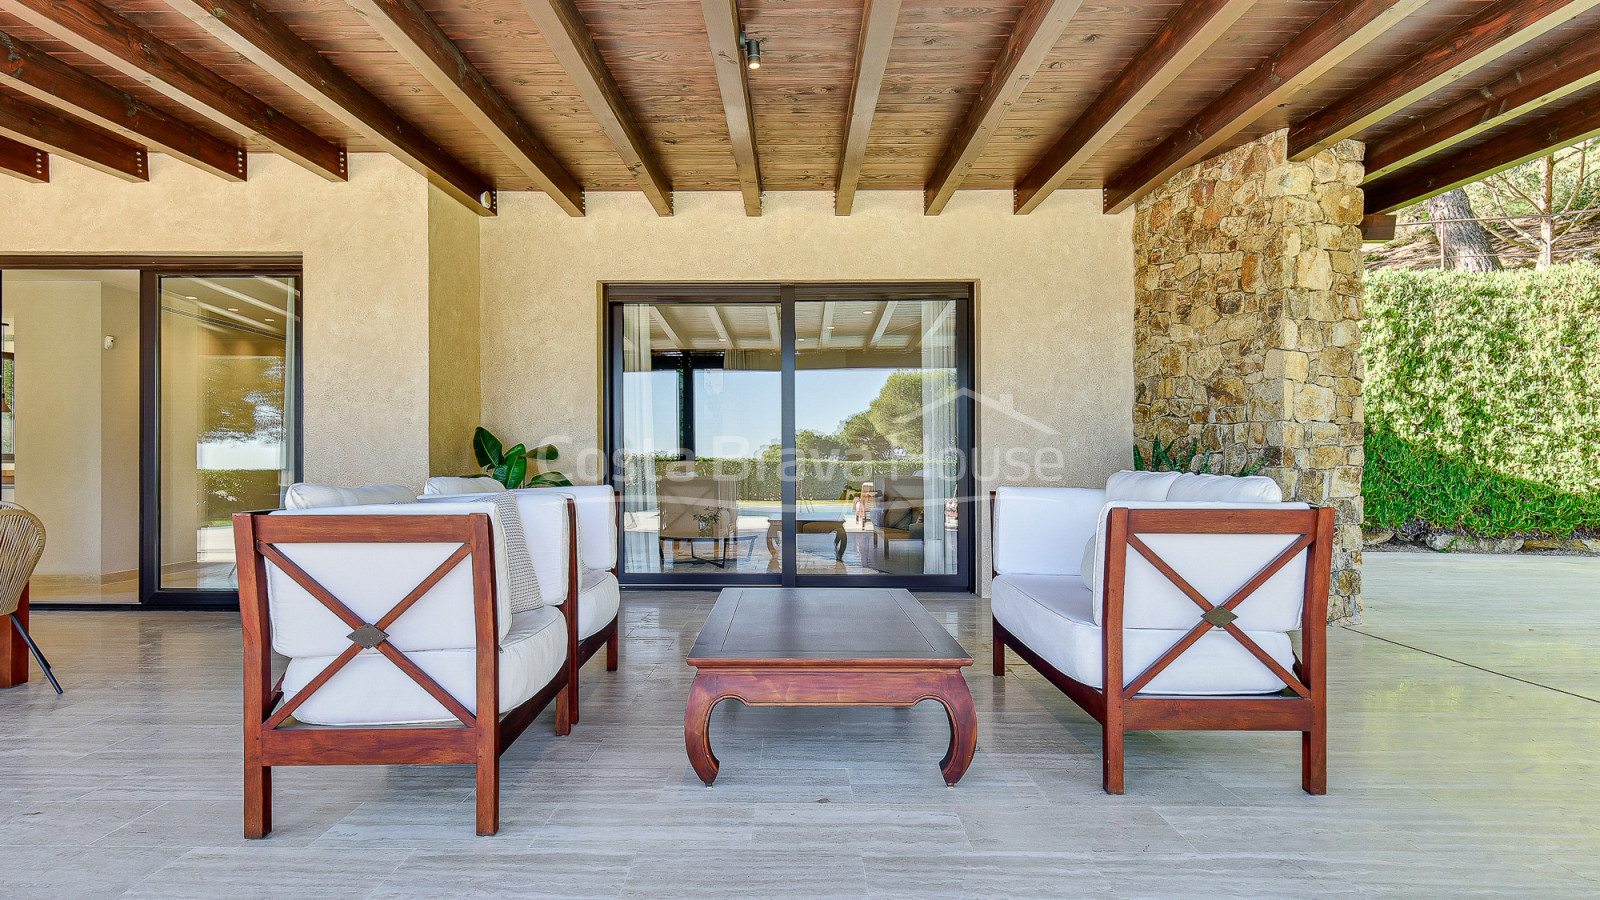 Exclusive luxury villa in Aiguablava, Begur, Costa Brava